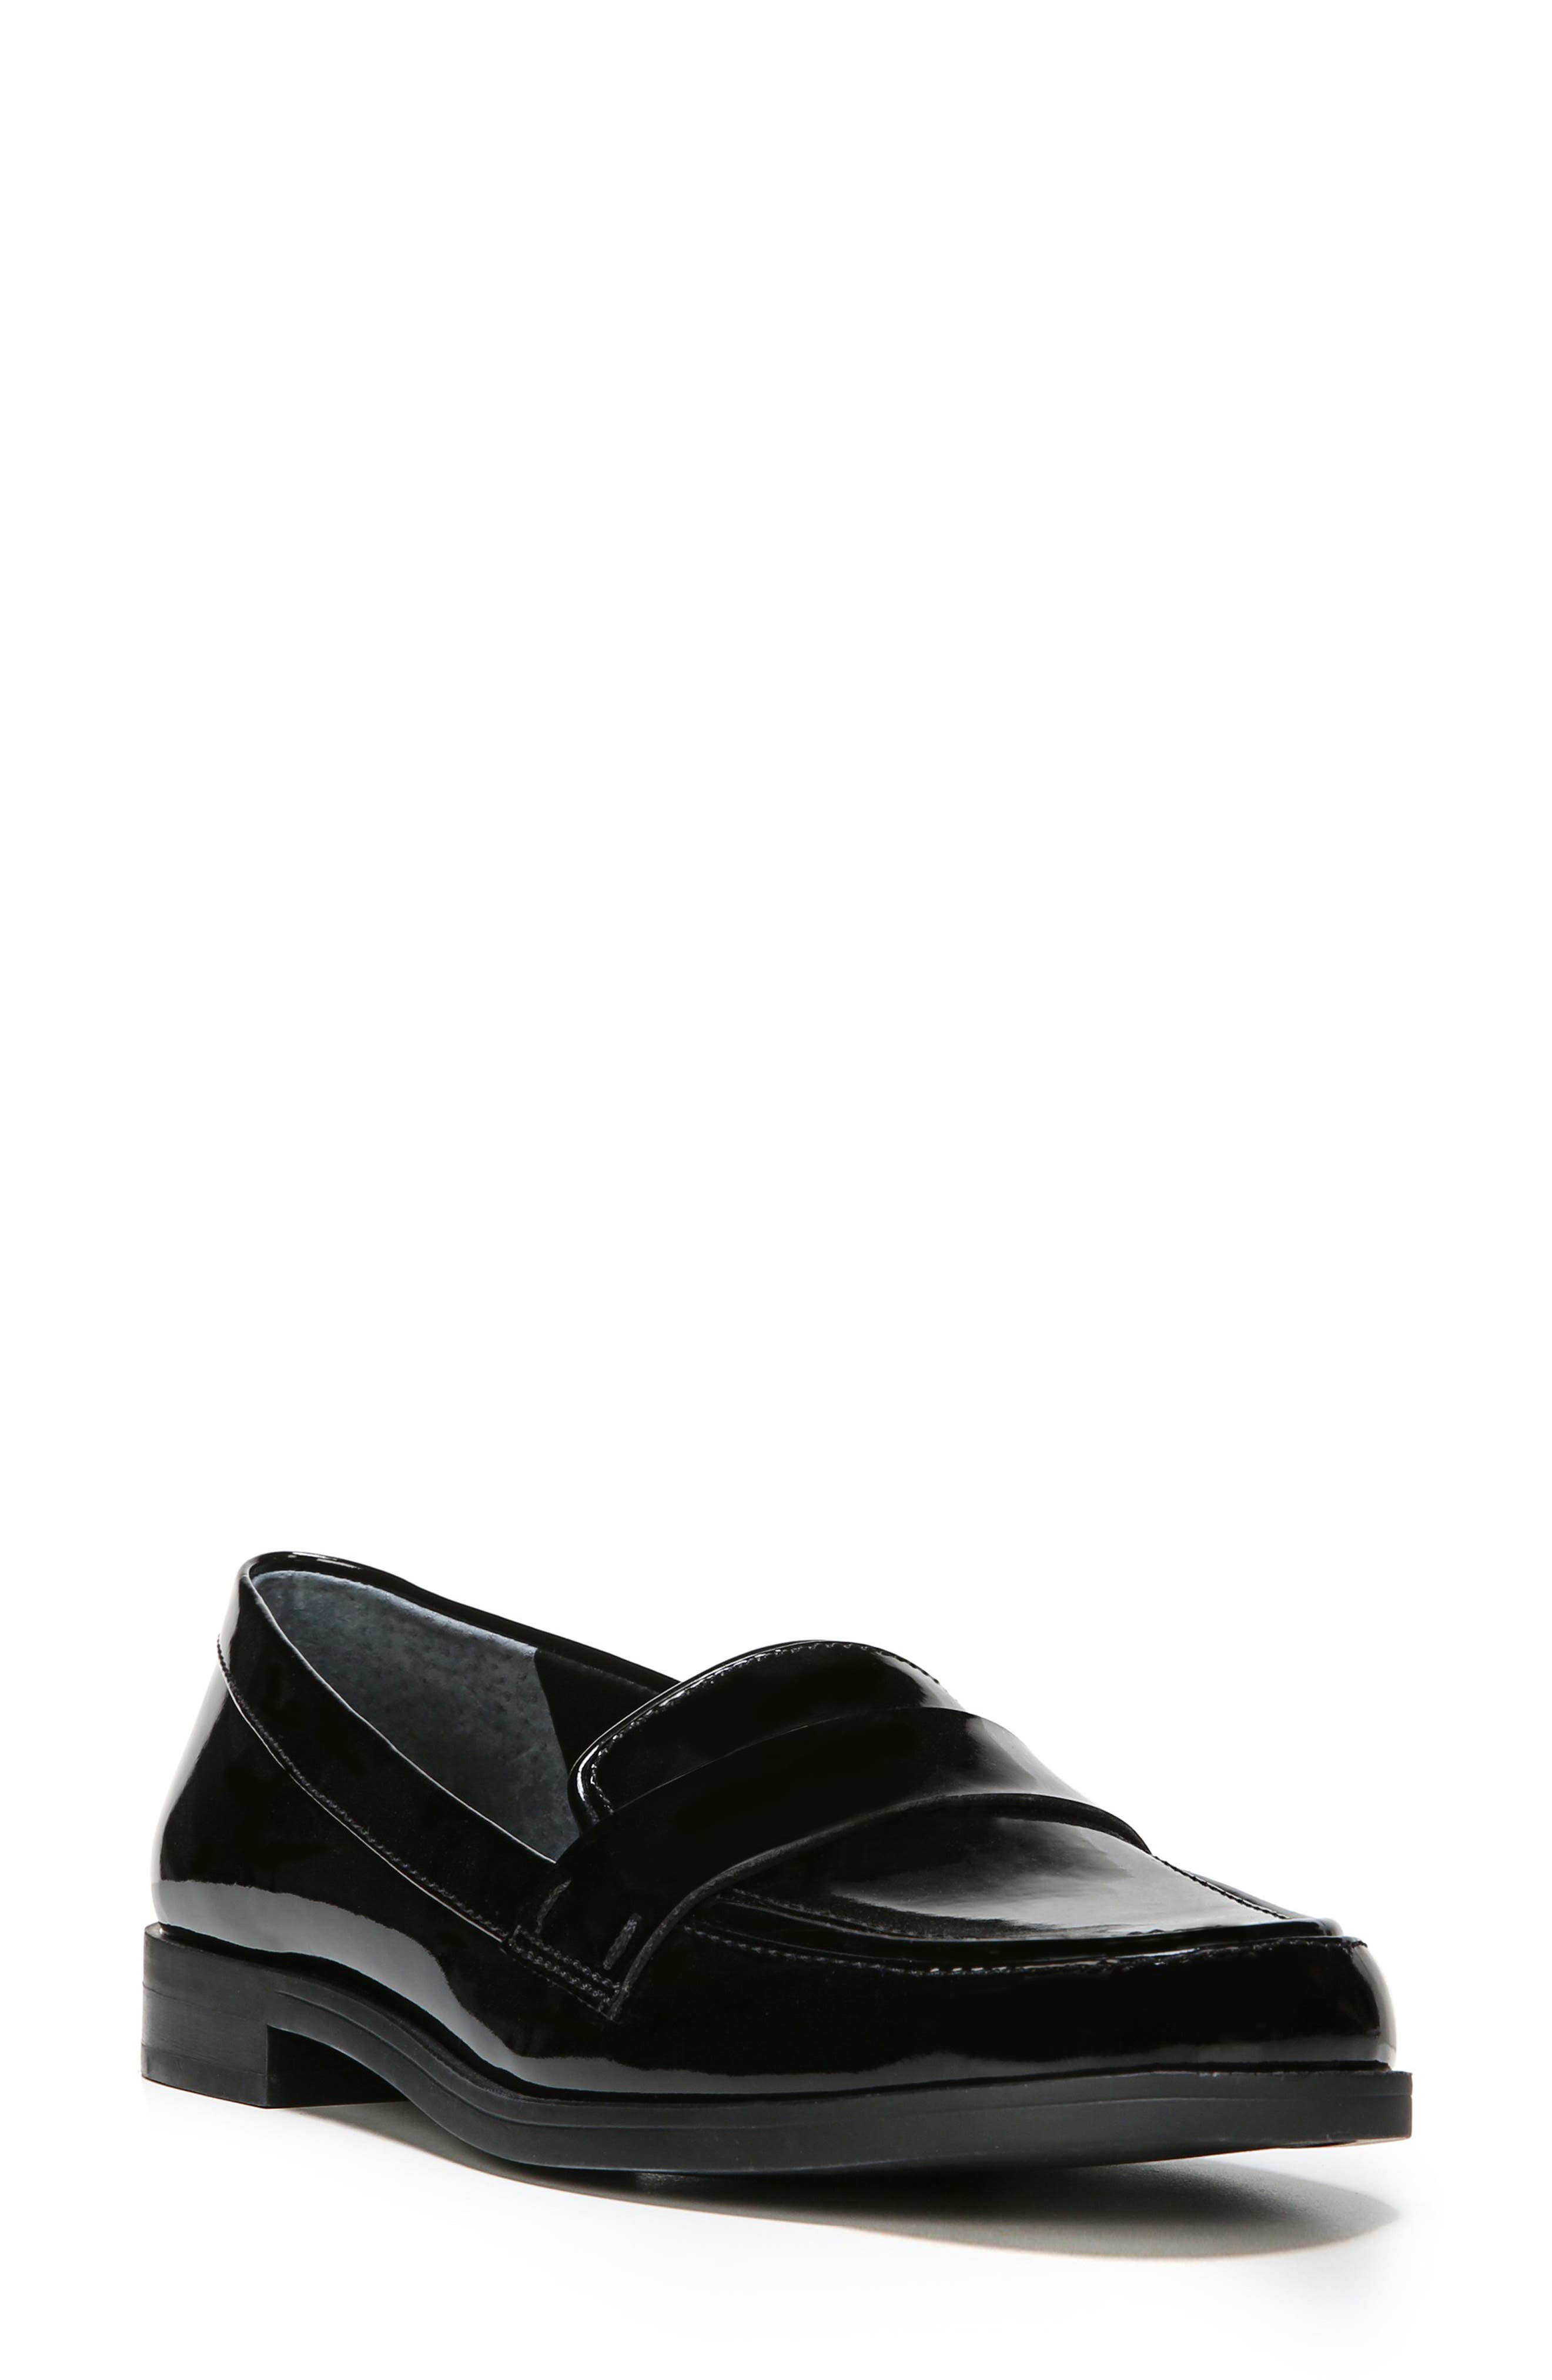 UPC 093638671537 product image for Women's Franco Sarto Valera Loafer, Size 6.5 M - Black | upcitemdb.com